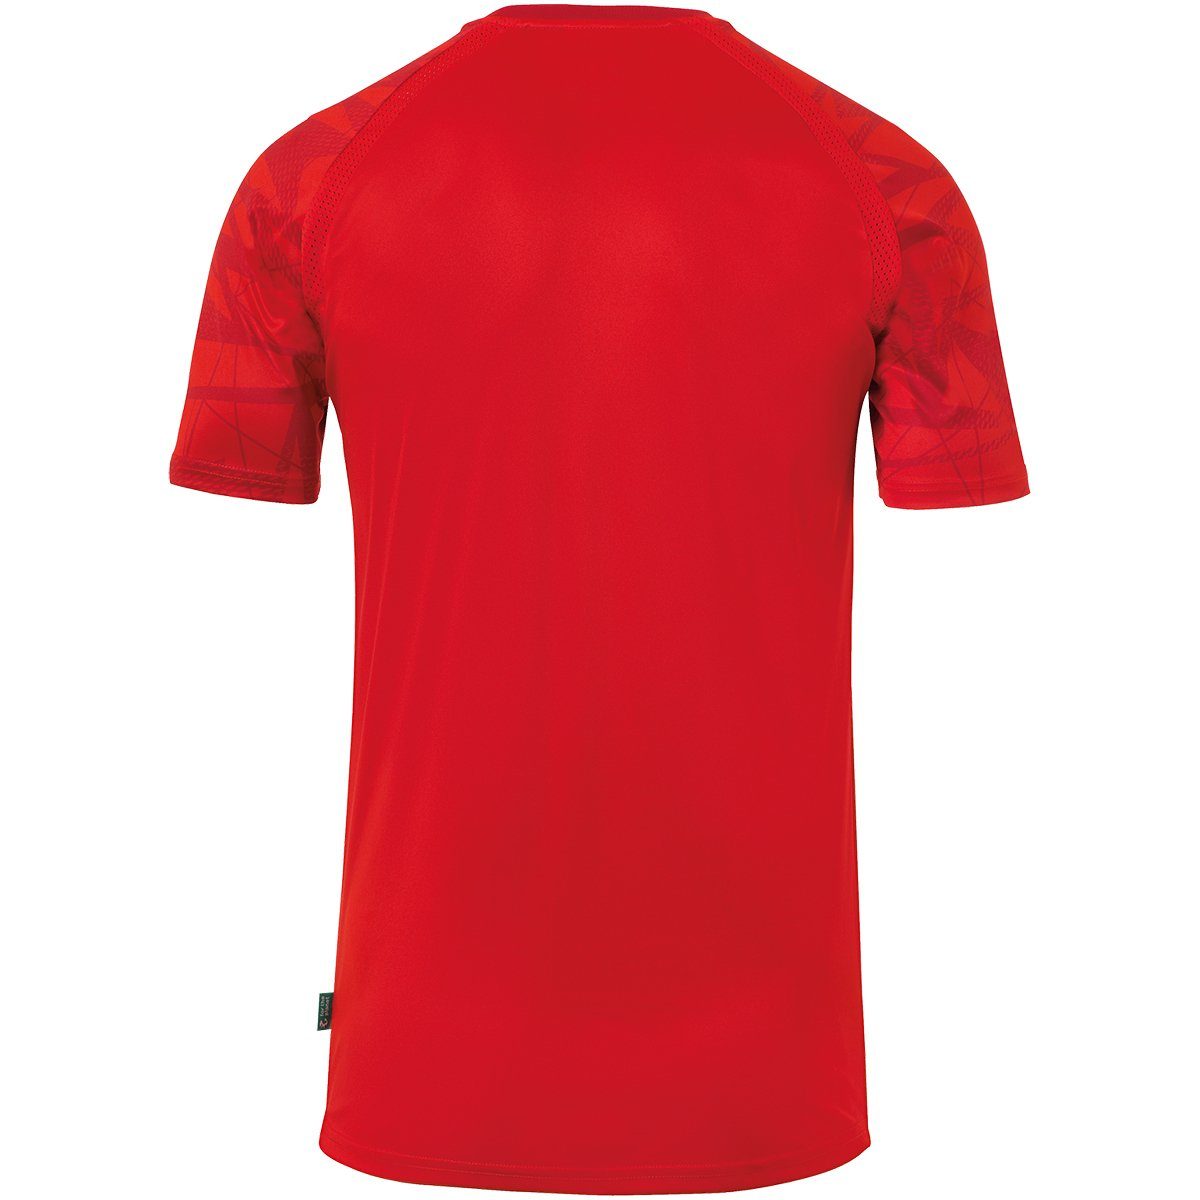 uhlsport Trainingsshirt TRIKOT Trainings-T-Shirt atmungsaktiv GOAL KURZARM rot/weiß 25 uhlsport